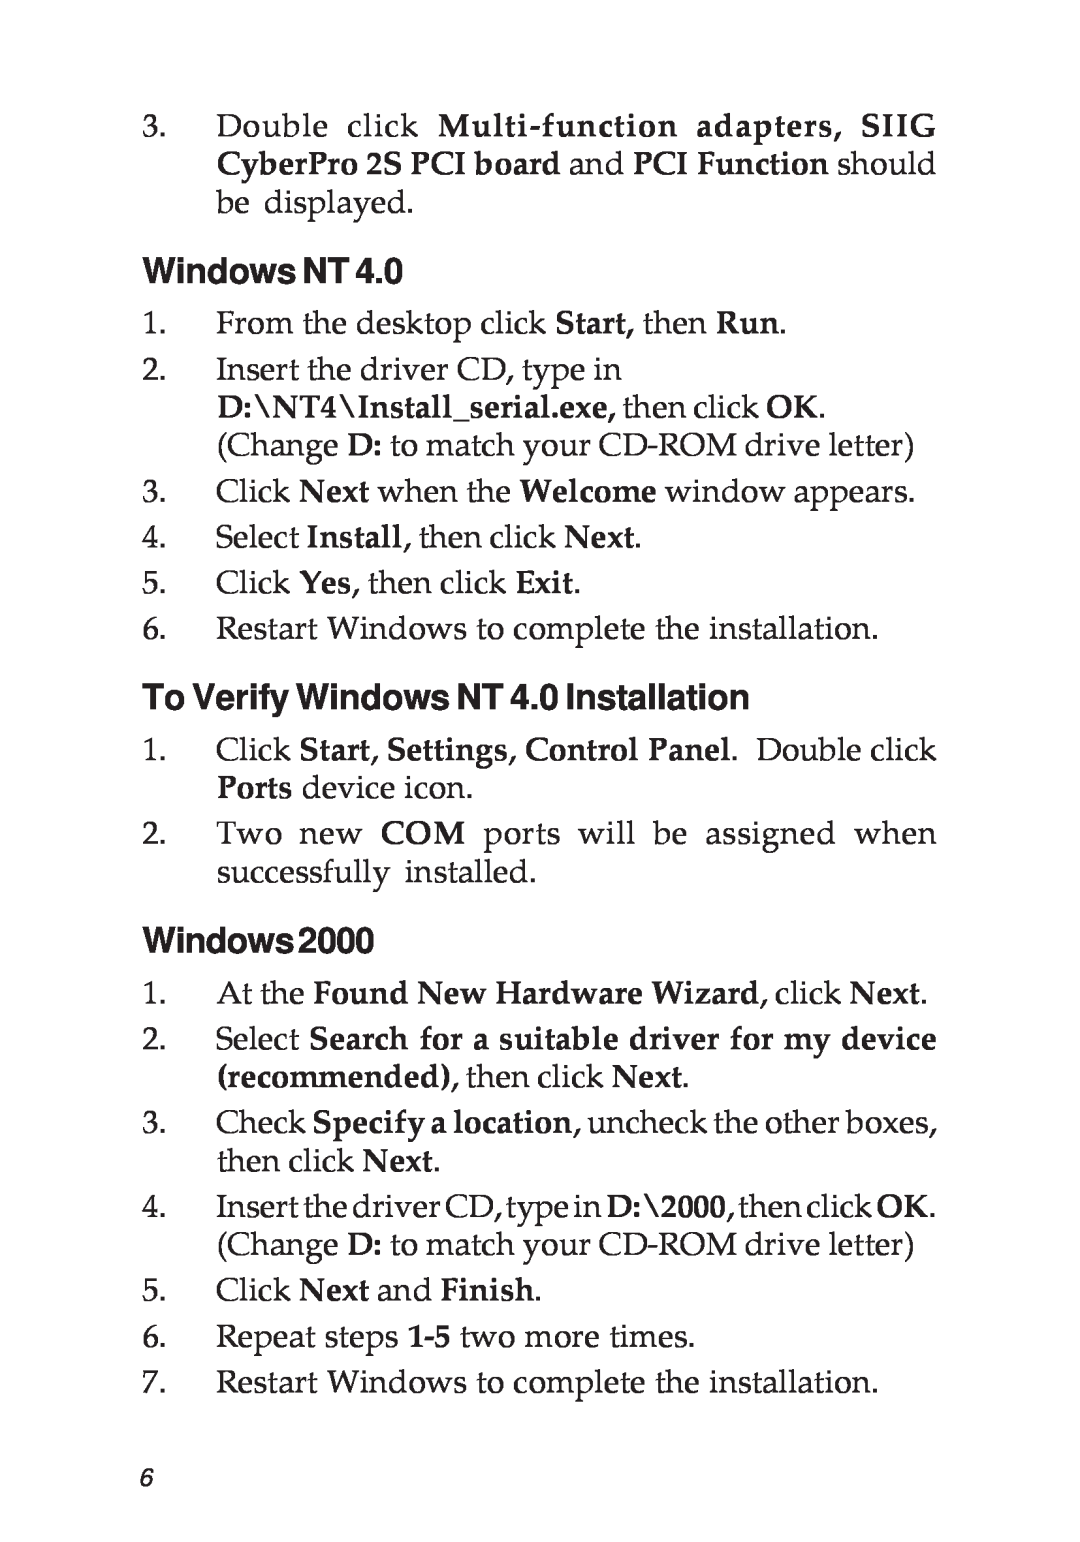 SIIG 2S manual To Verify Windows NT 4.0 Installation, Windows2000 